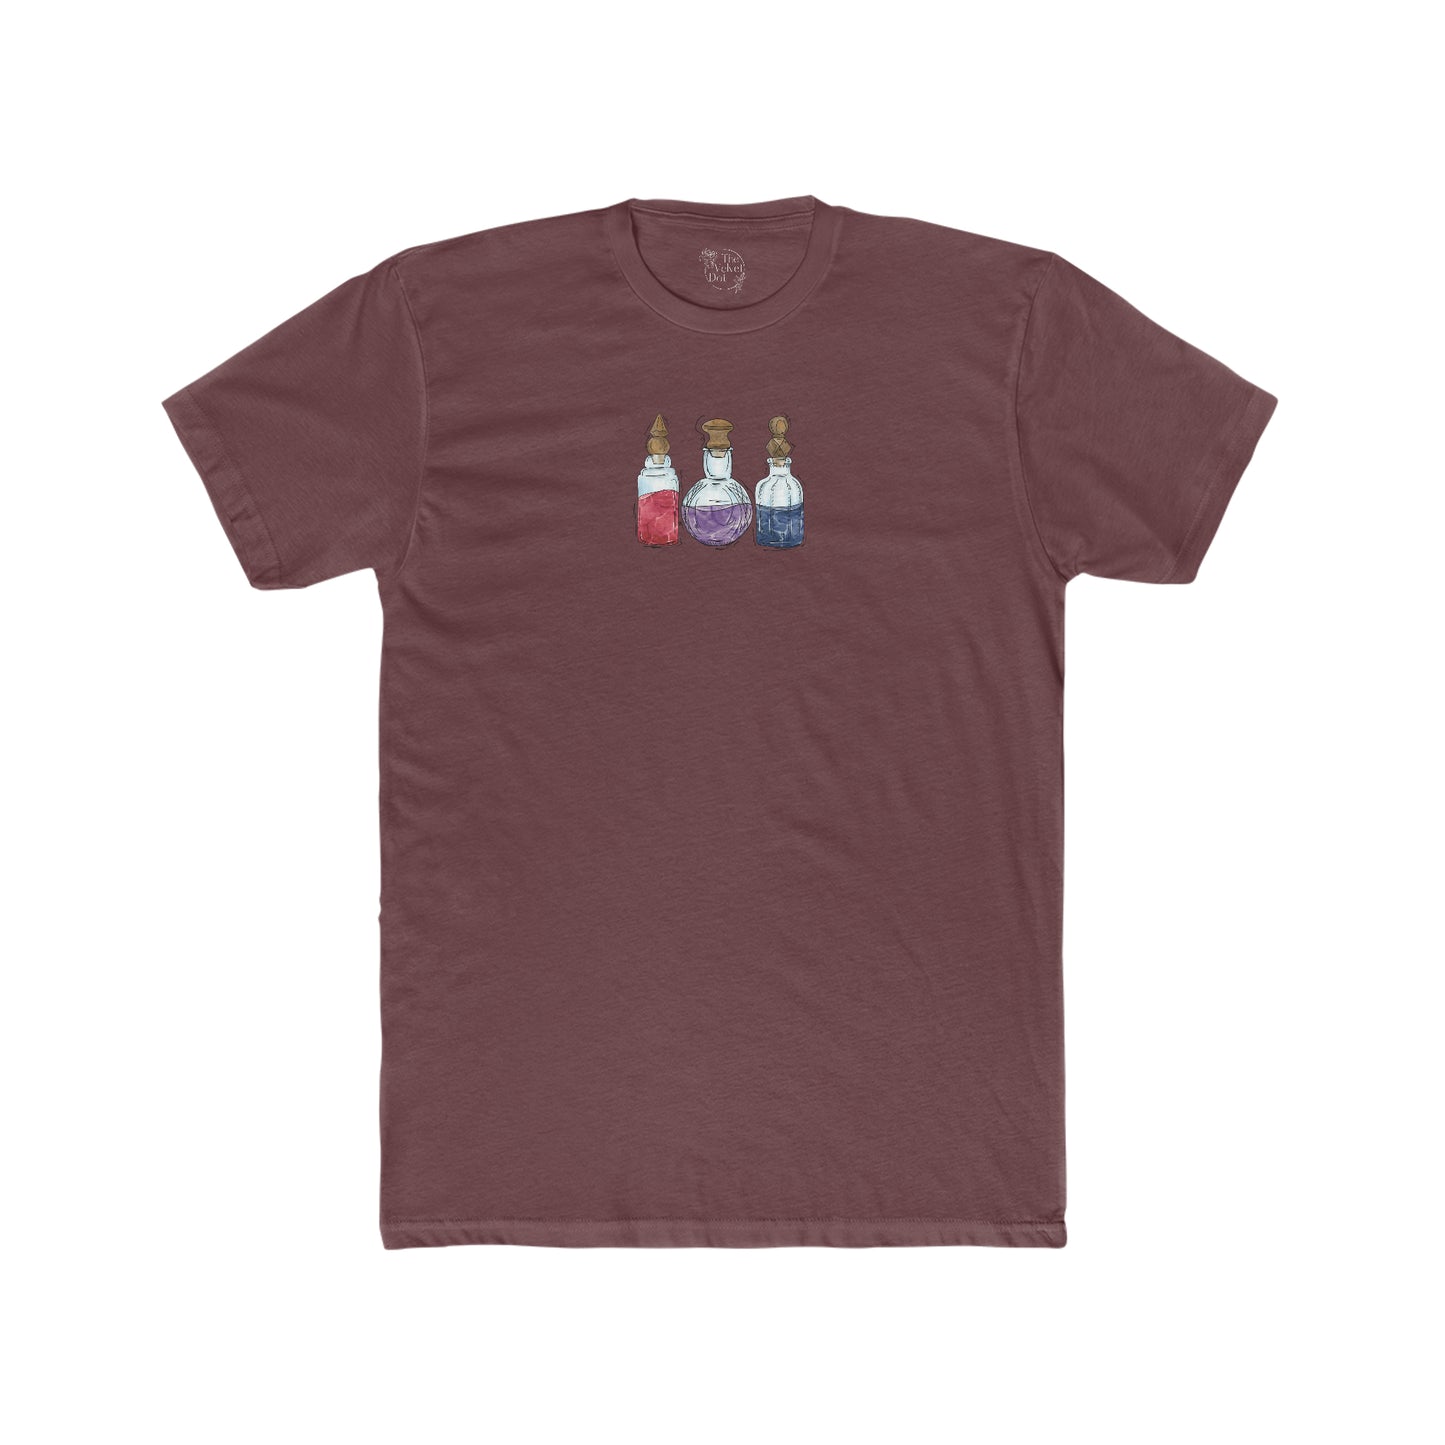 Bisexual Pride Flag Potion Bottles - Men's T-Shirt